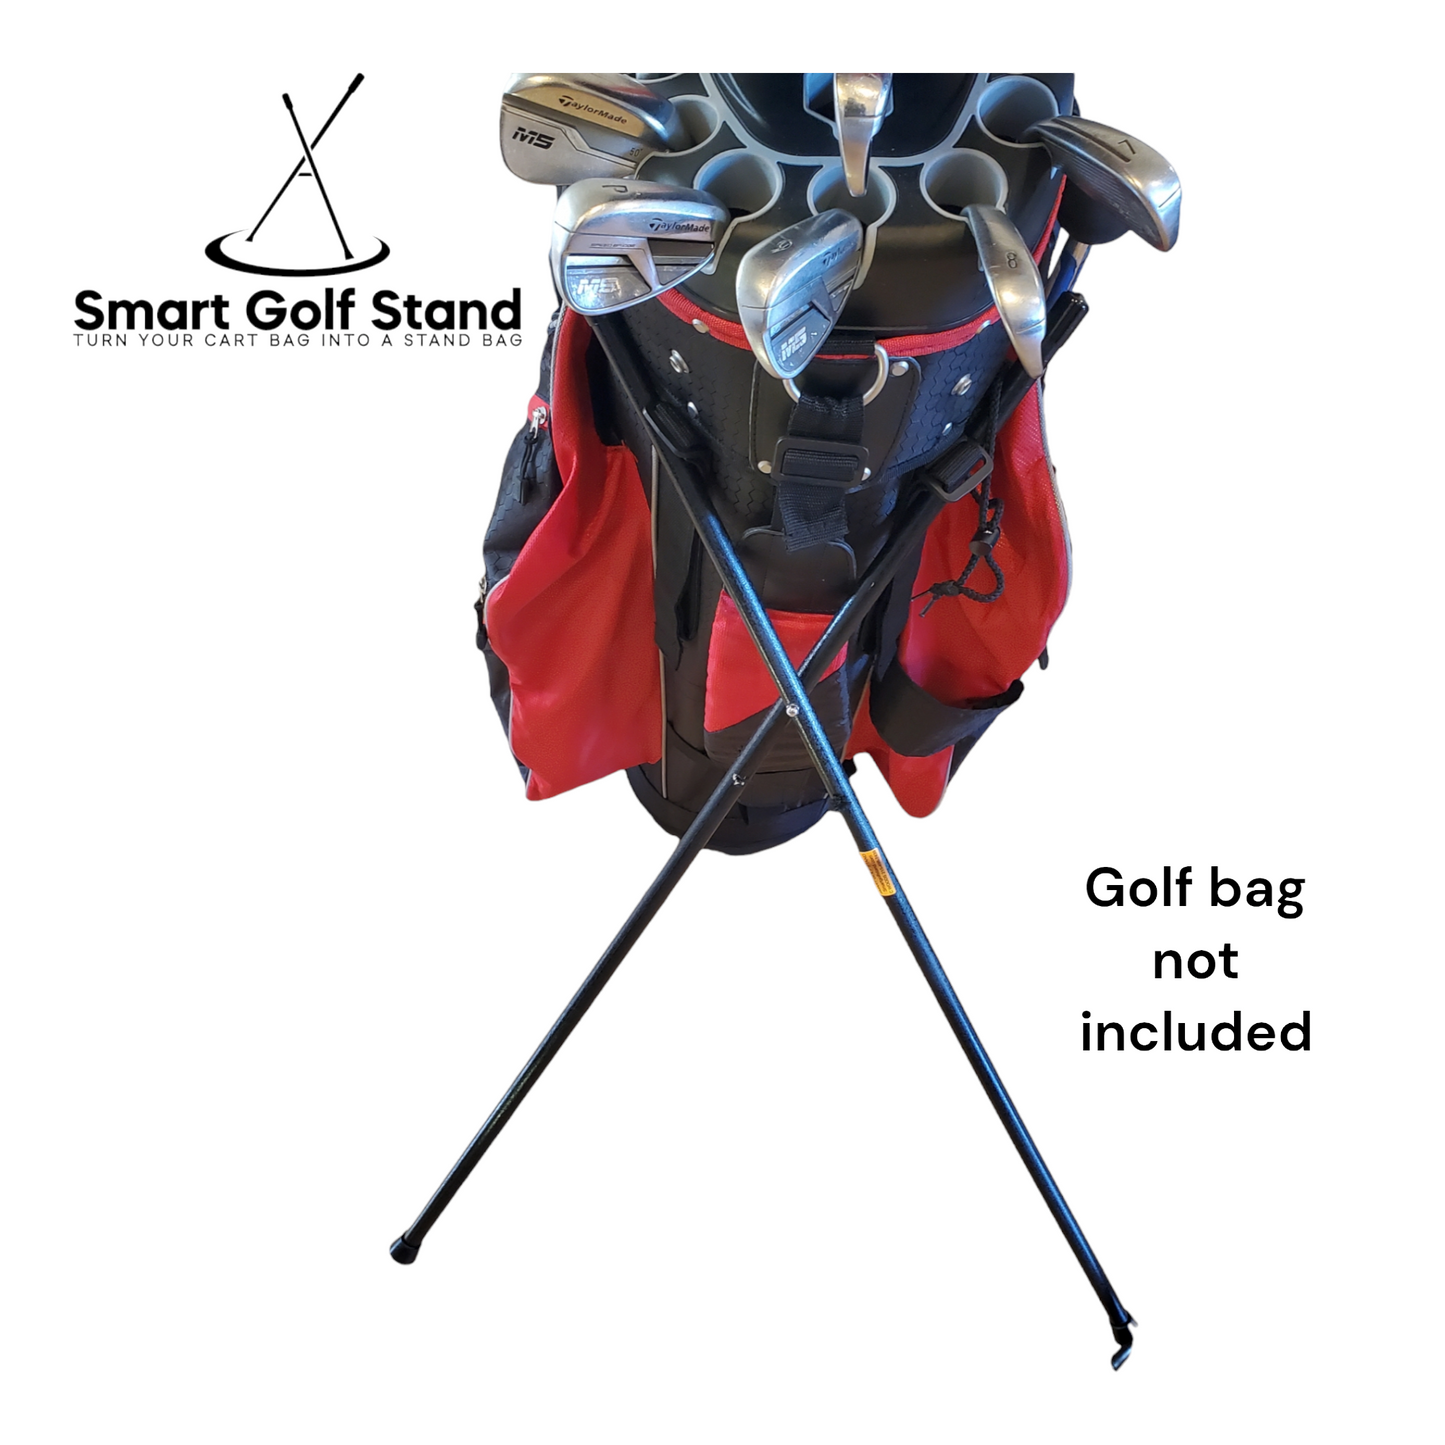 Smart Golf Stand 2.0